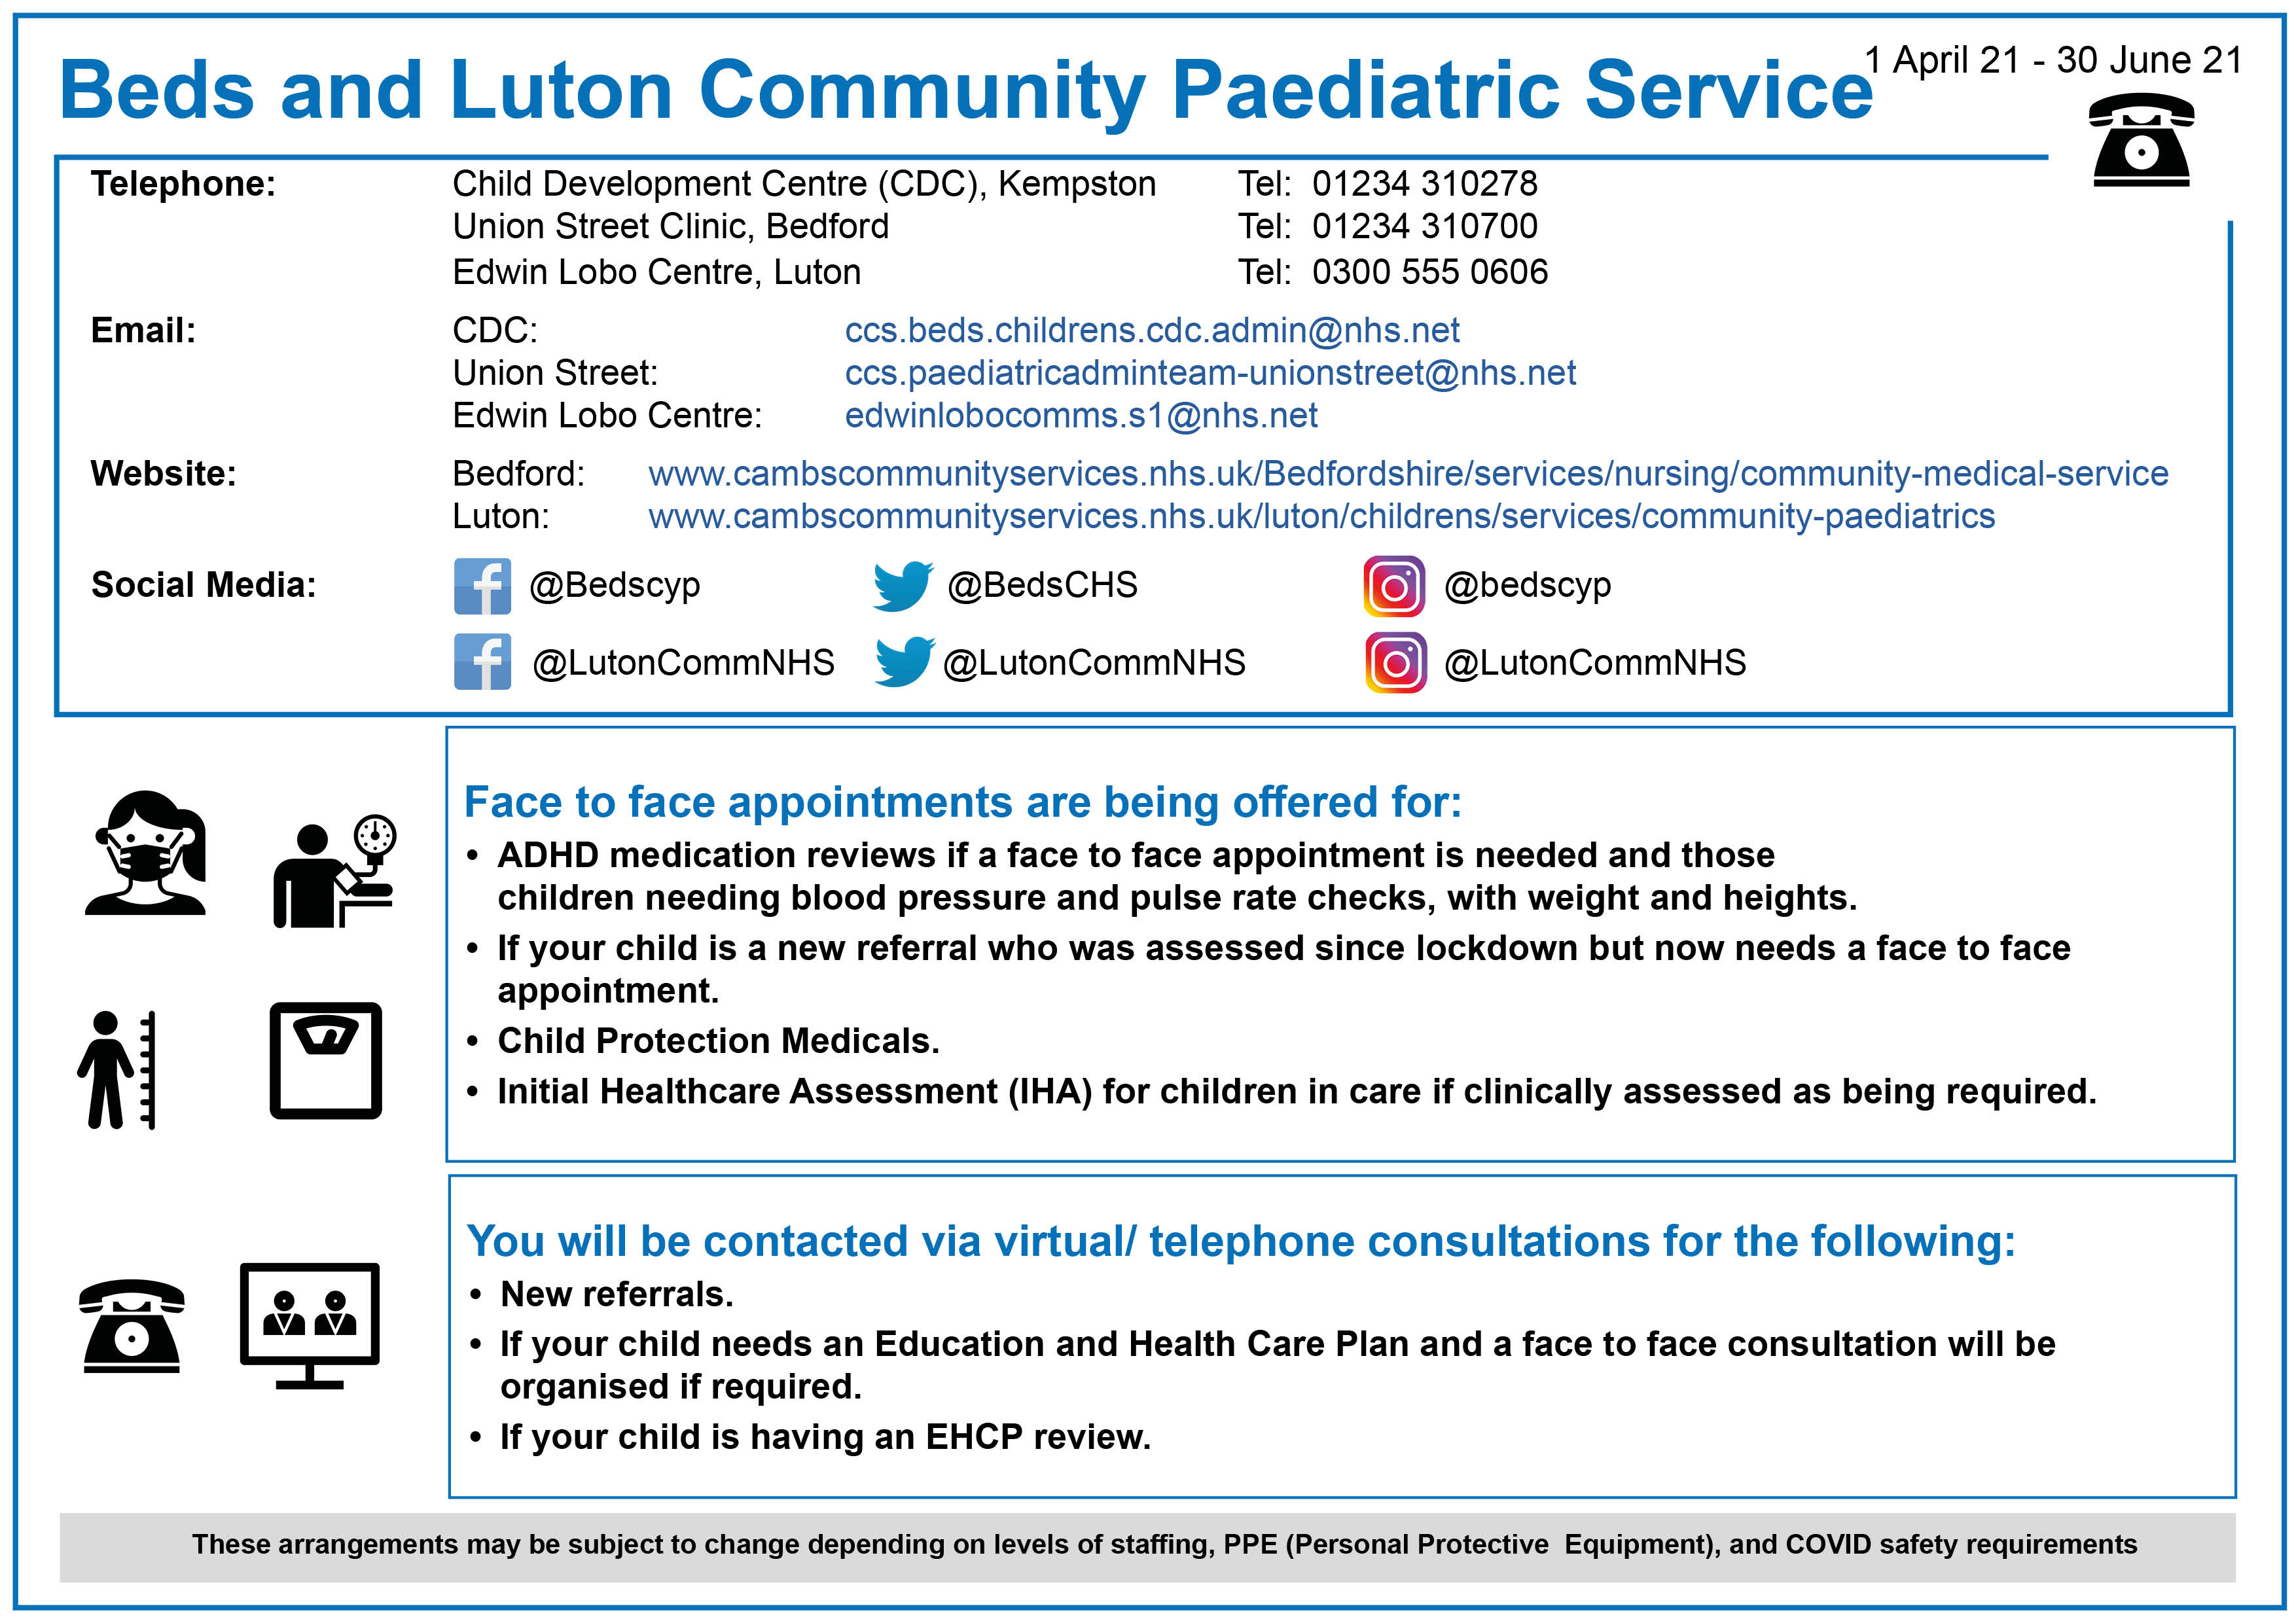 Beds and Luton Community Paediatrics Service